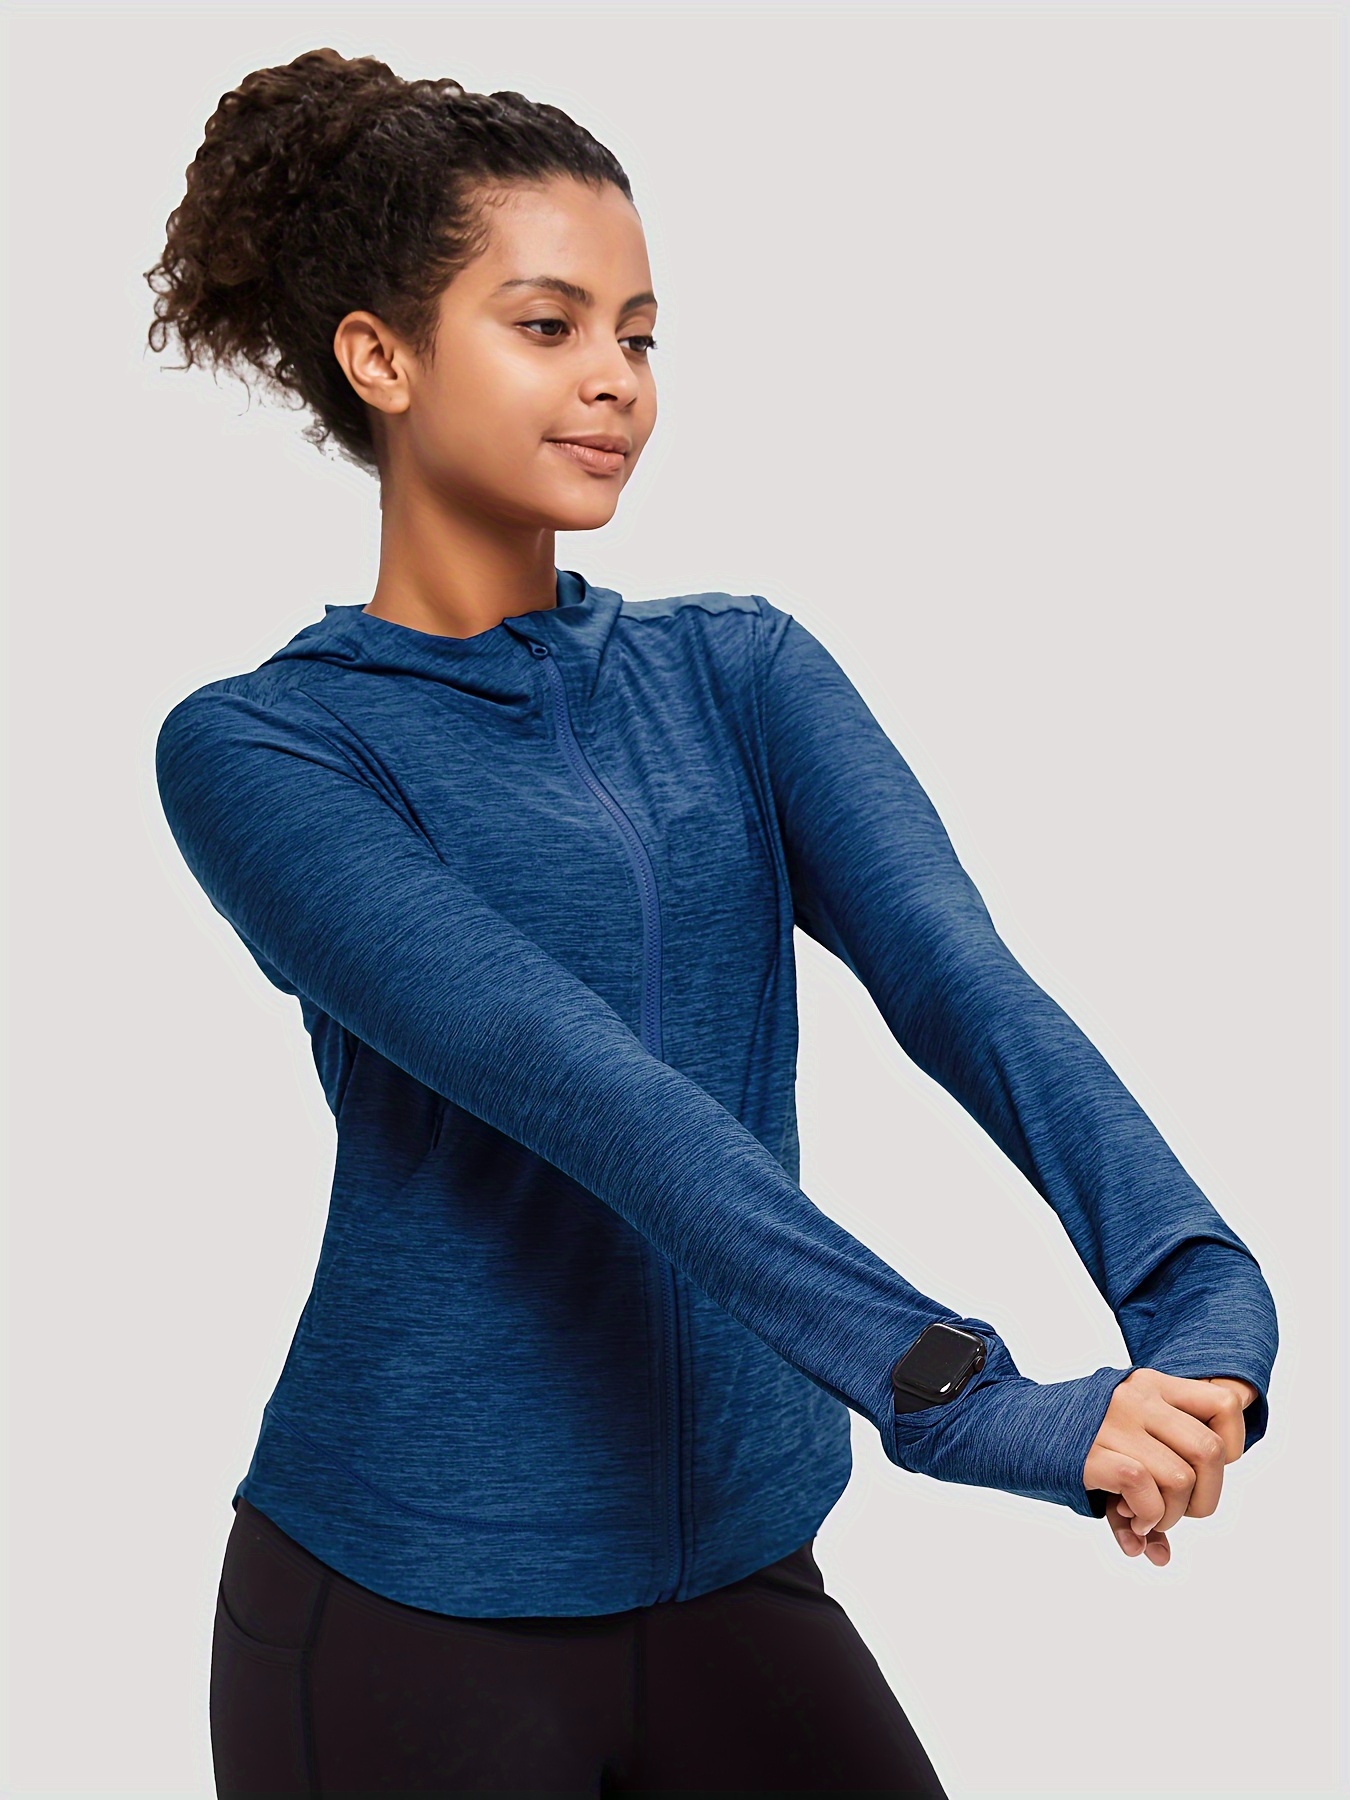 Women's Full Zip Up Running Track Jacket Long-sleeved Yoga Sportswear  Workout Sports Jacket